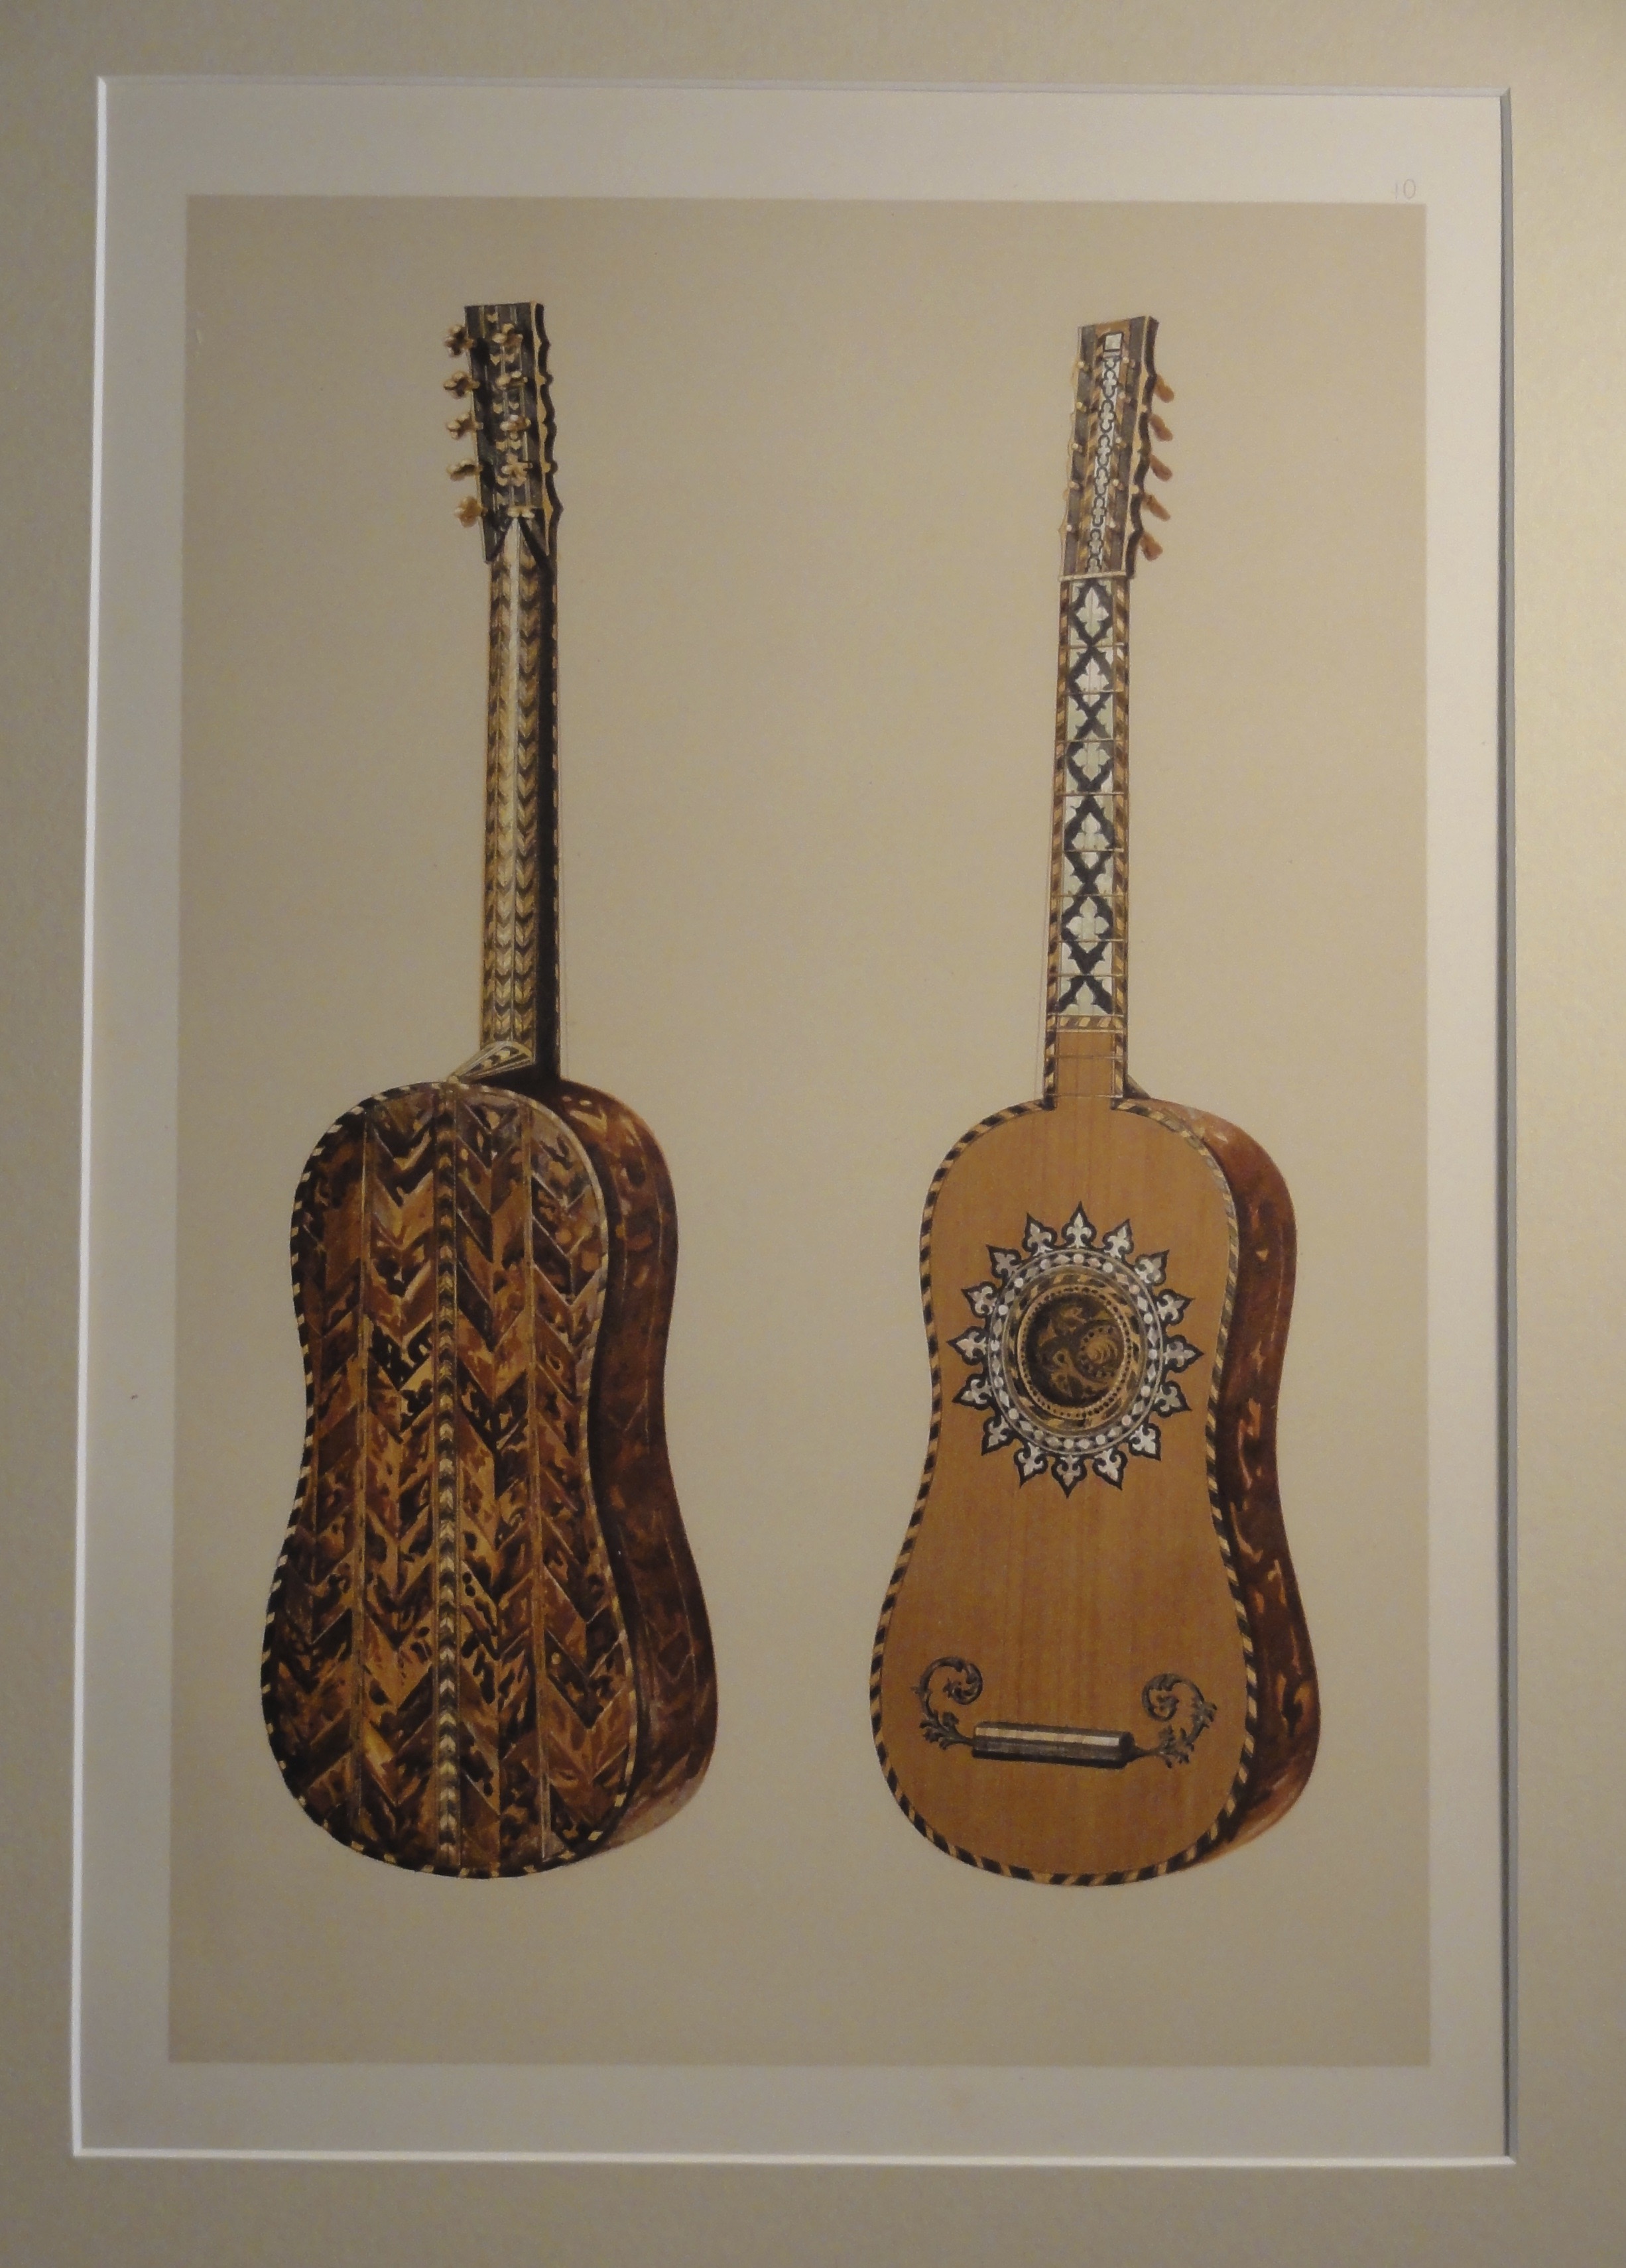 The Rizzo Guitar